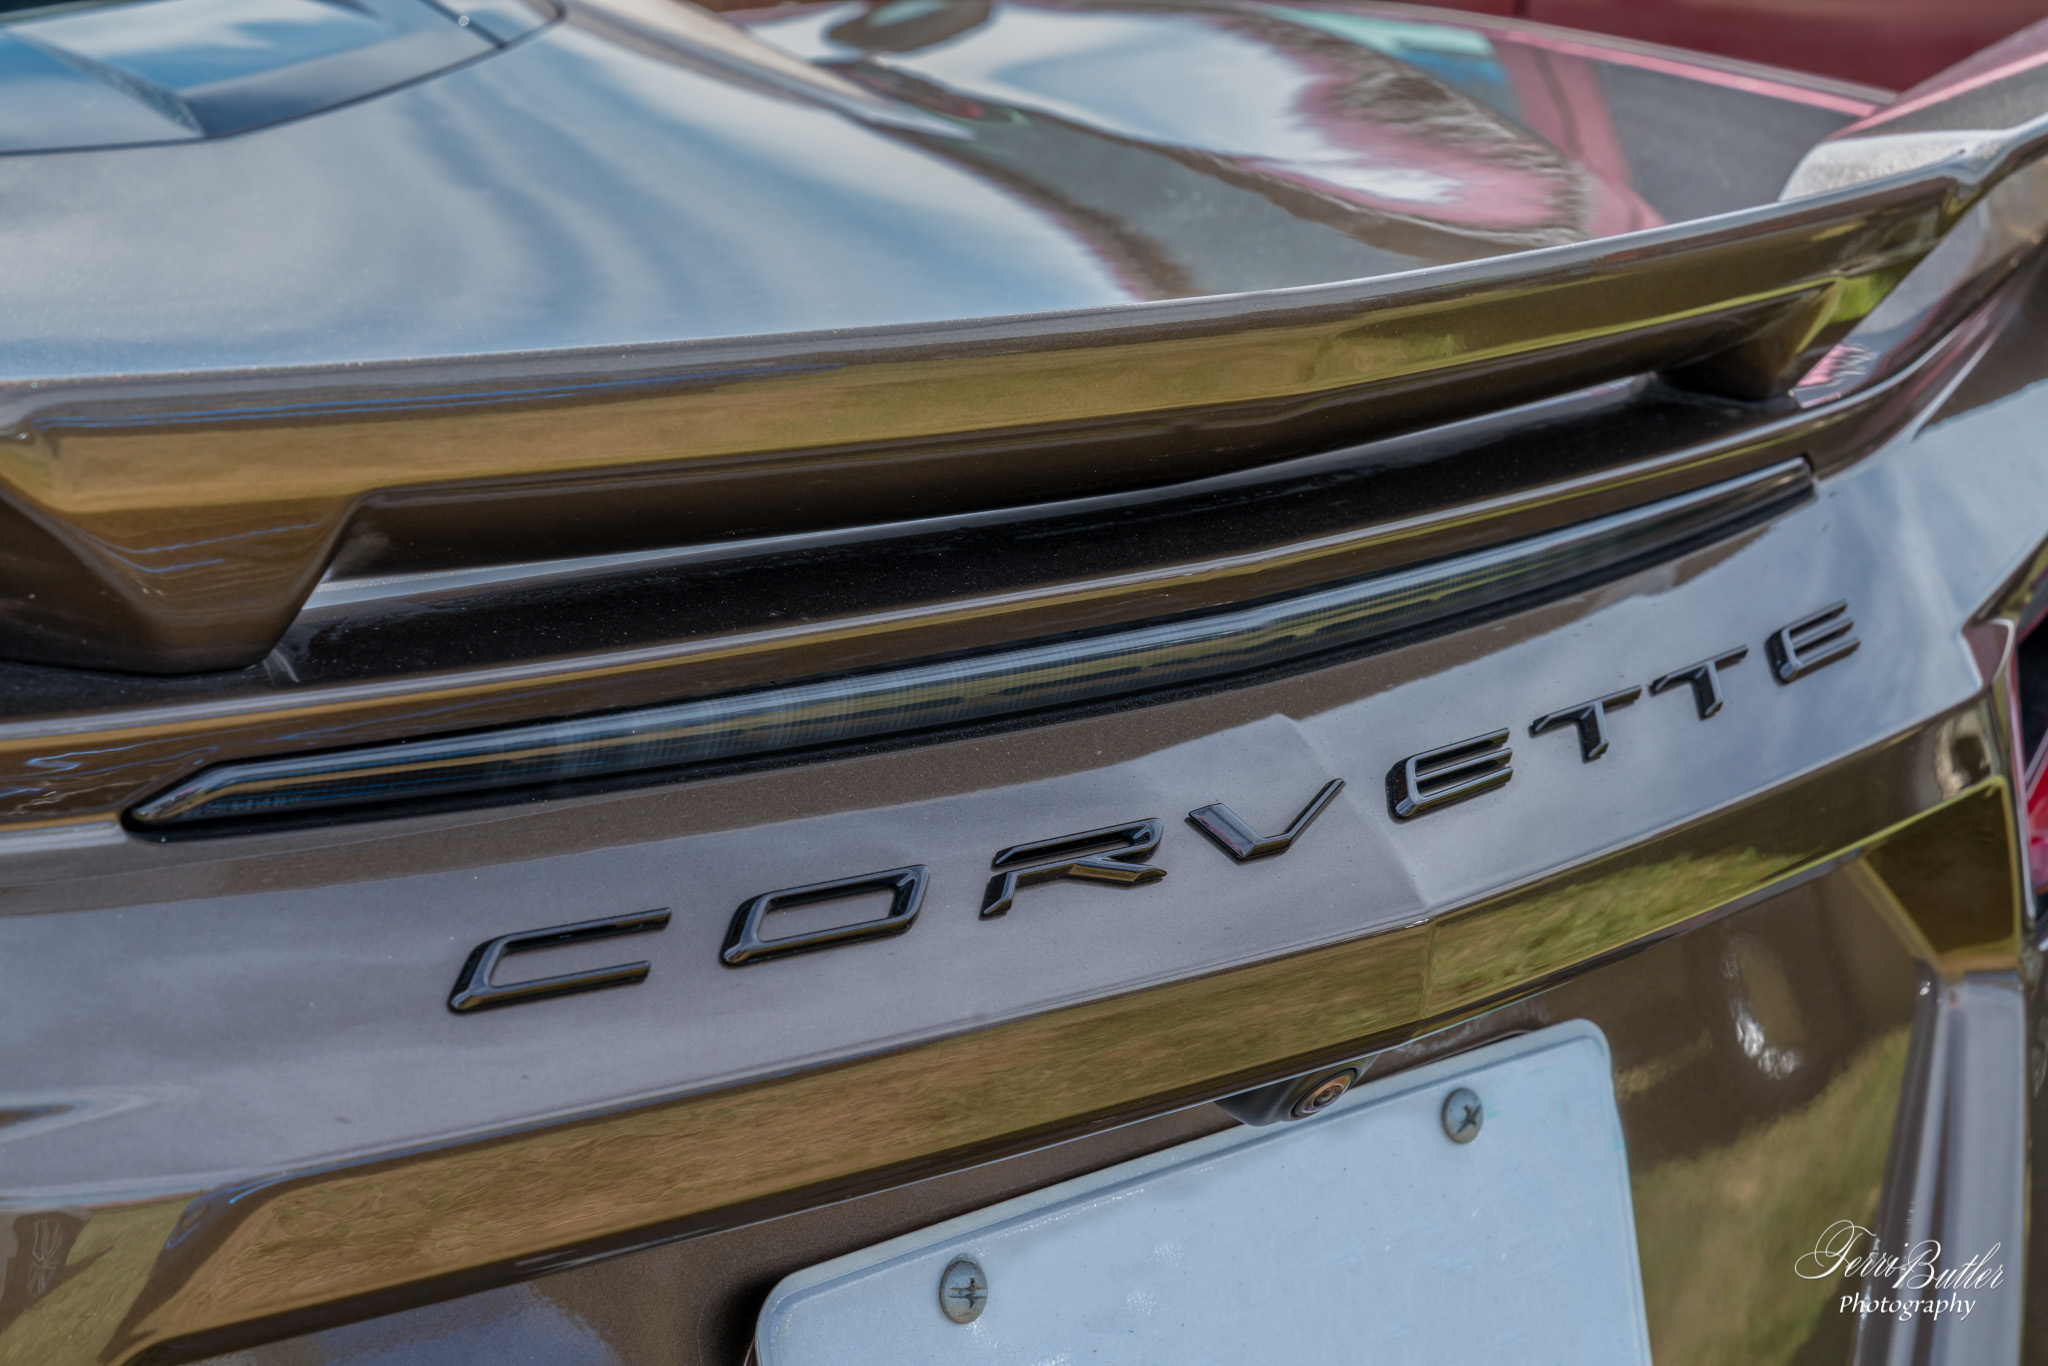 More Images of the C8 2020 Corvette Stingray